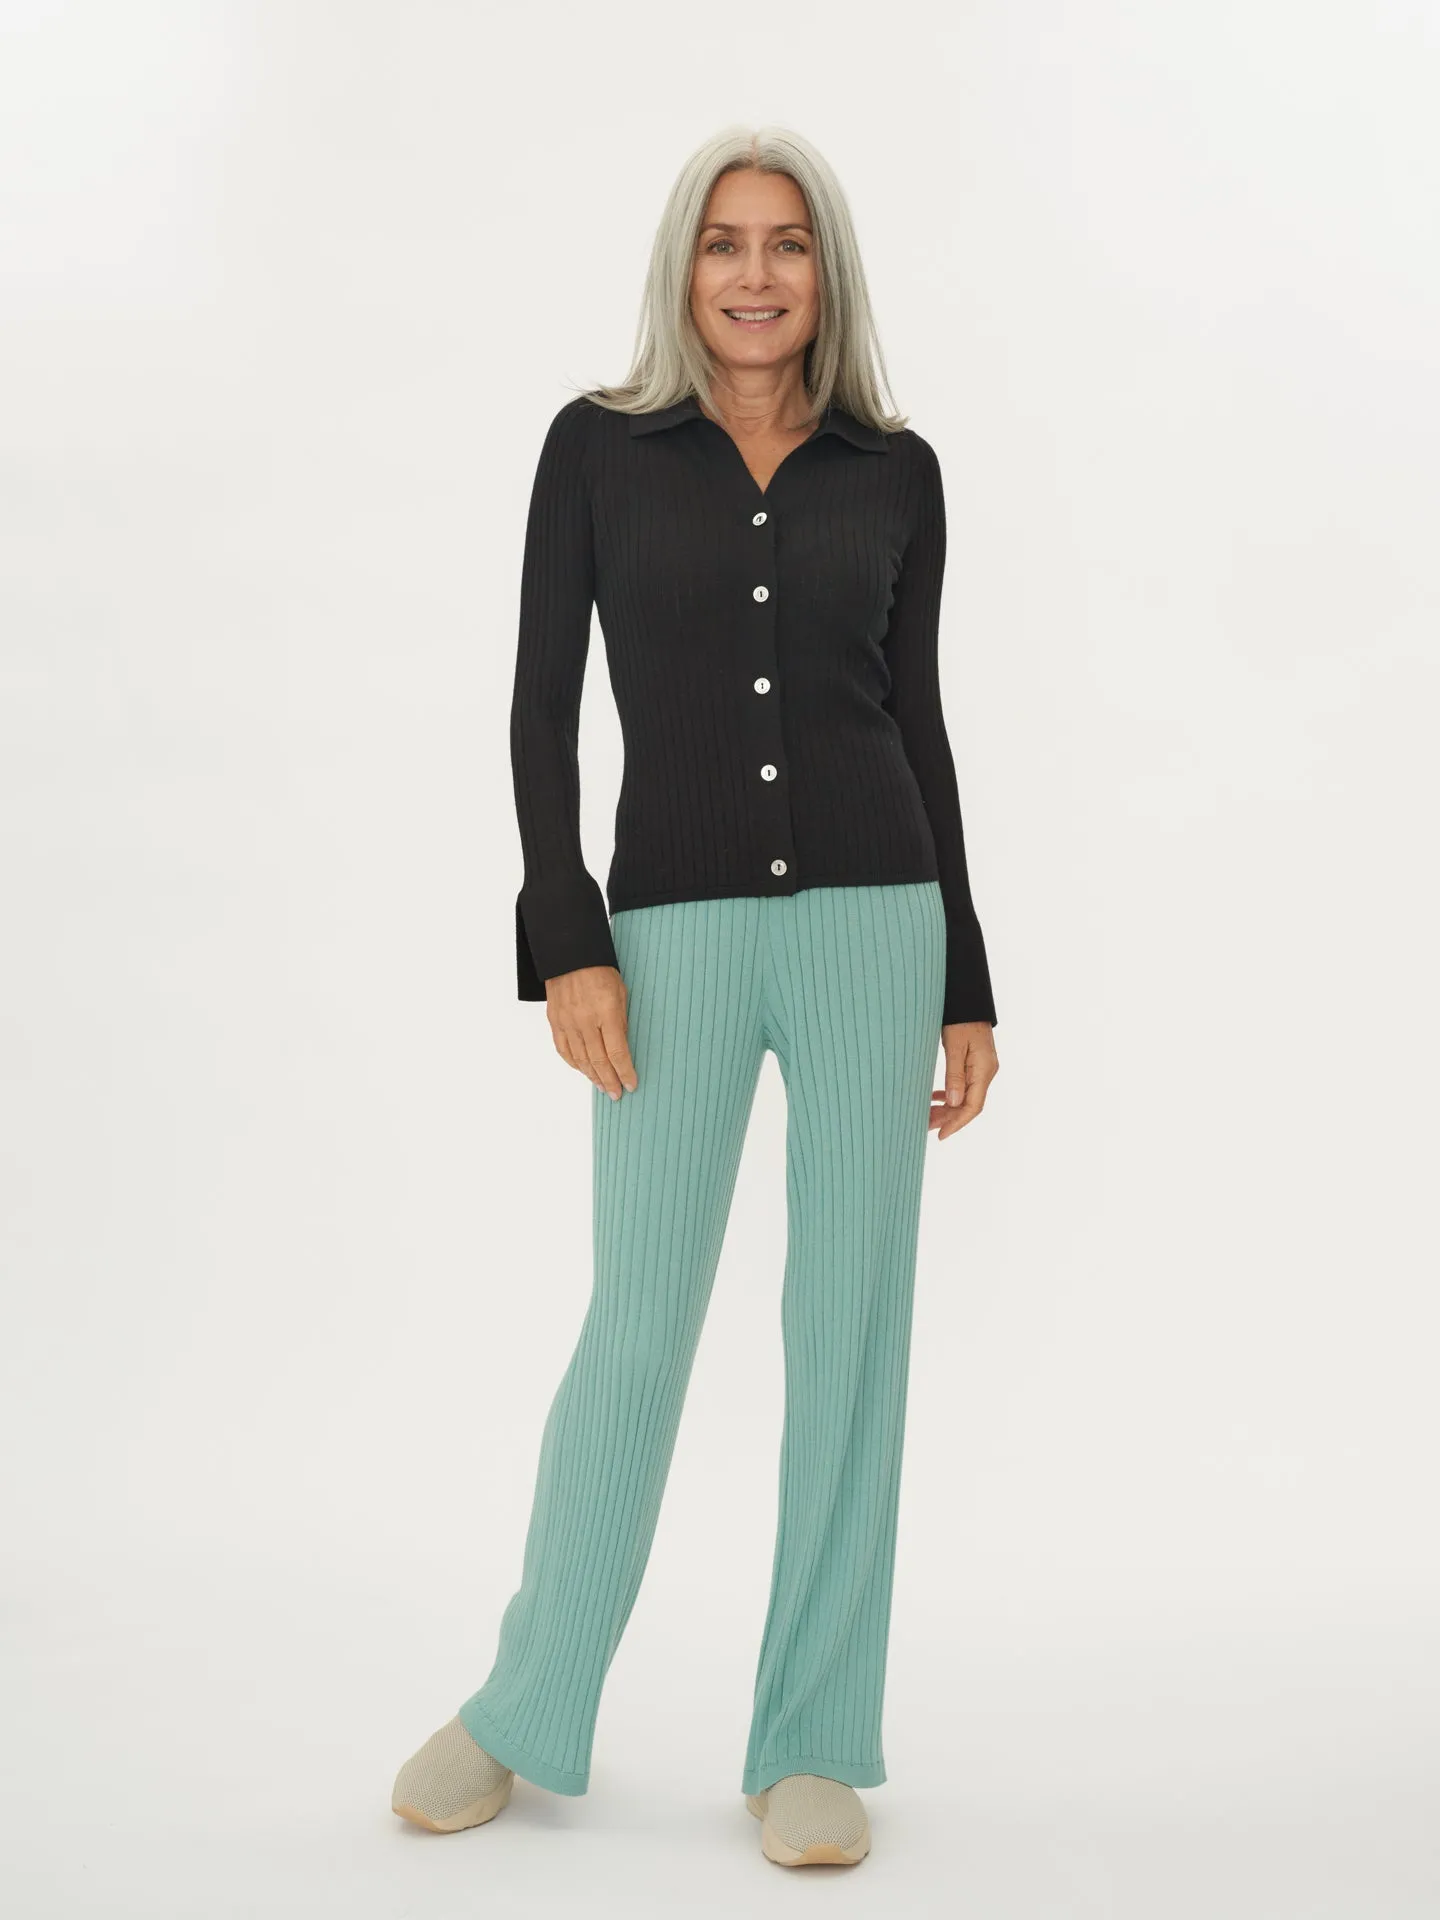 Women's Silk Cashmere Button Up Cardigan Black - Gobi Cashmere